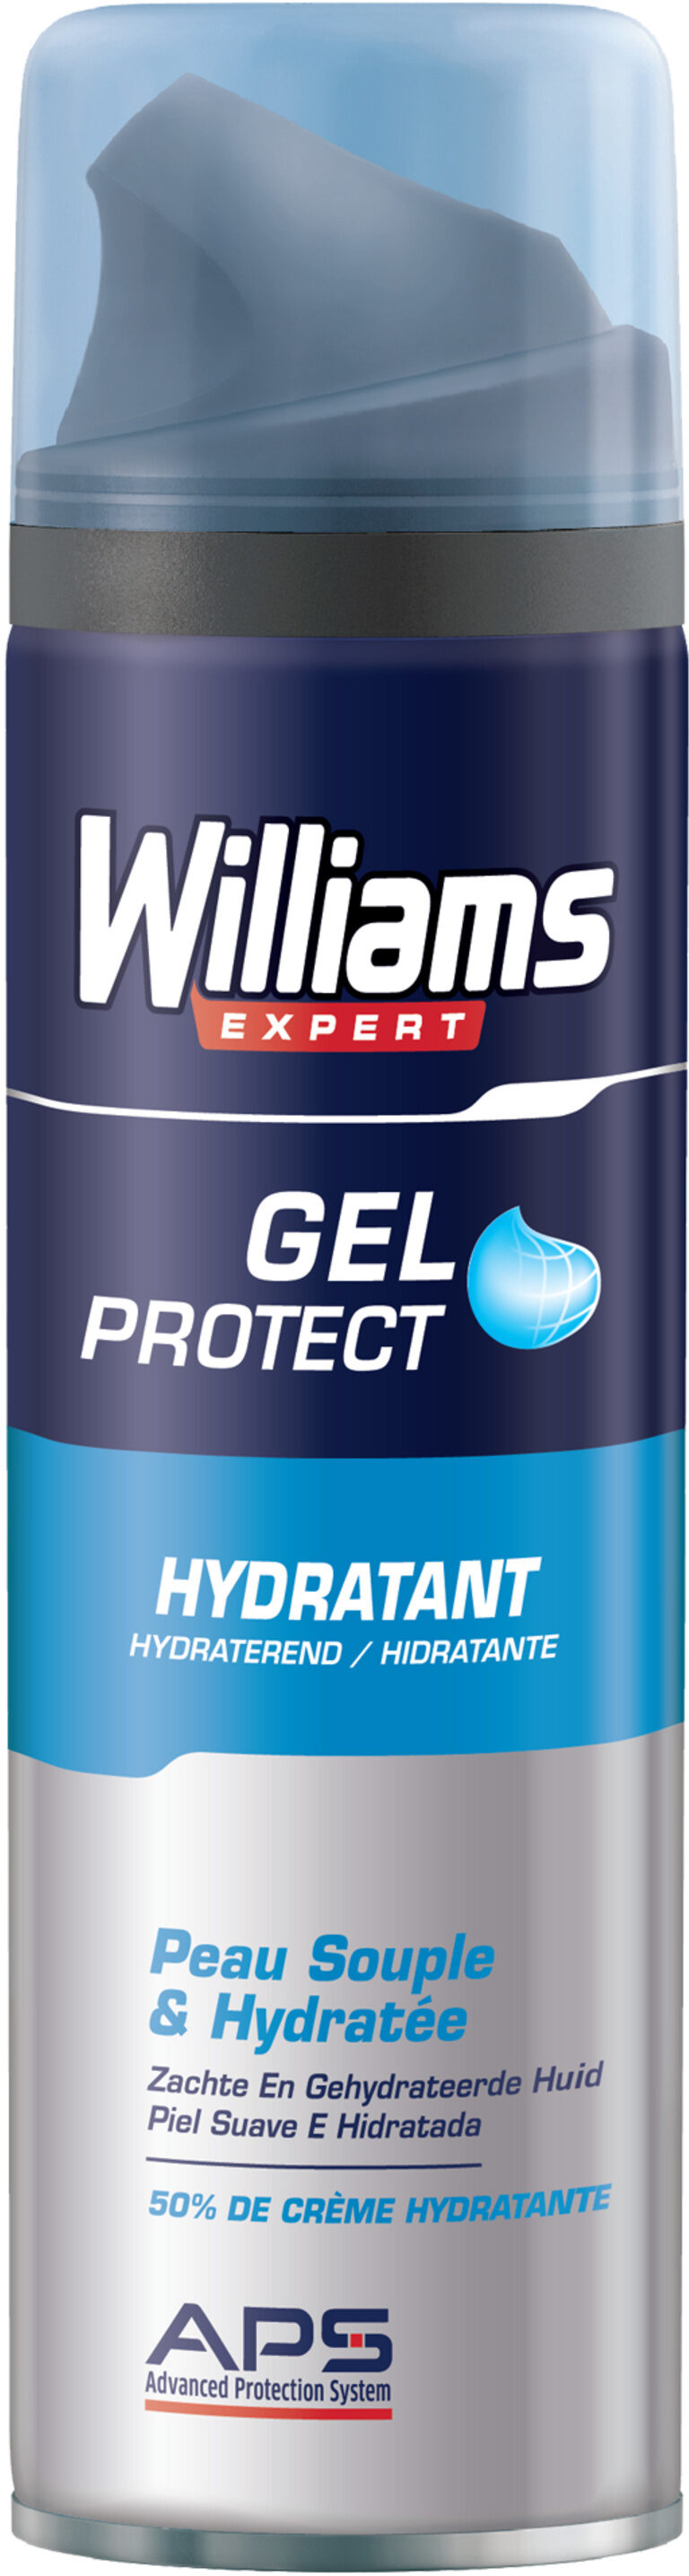 Williams Gel à Raser Homme Hydratant 200ml - Produto - fr